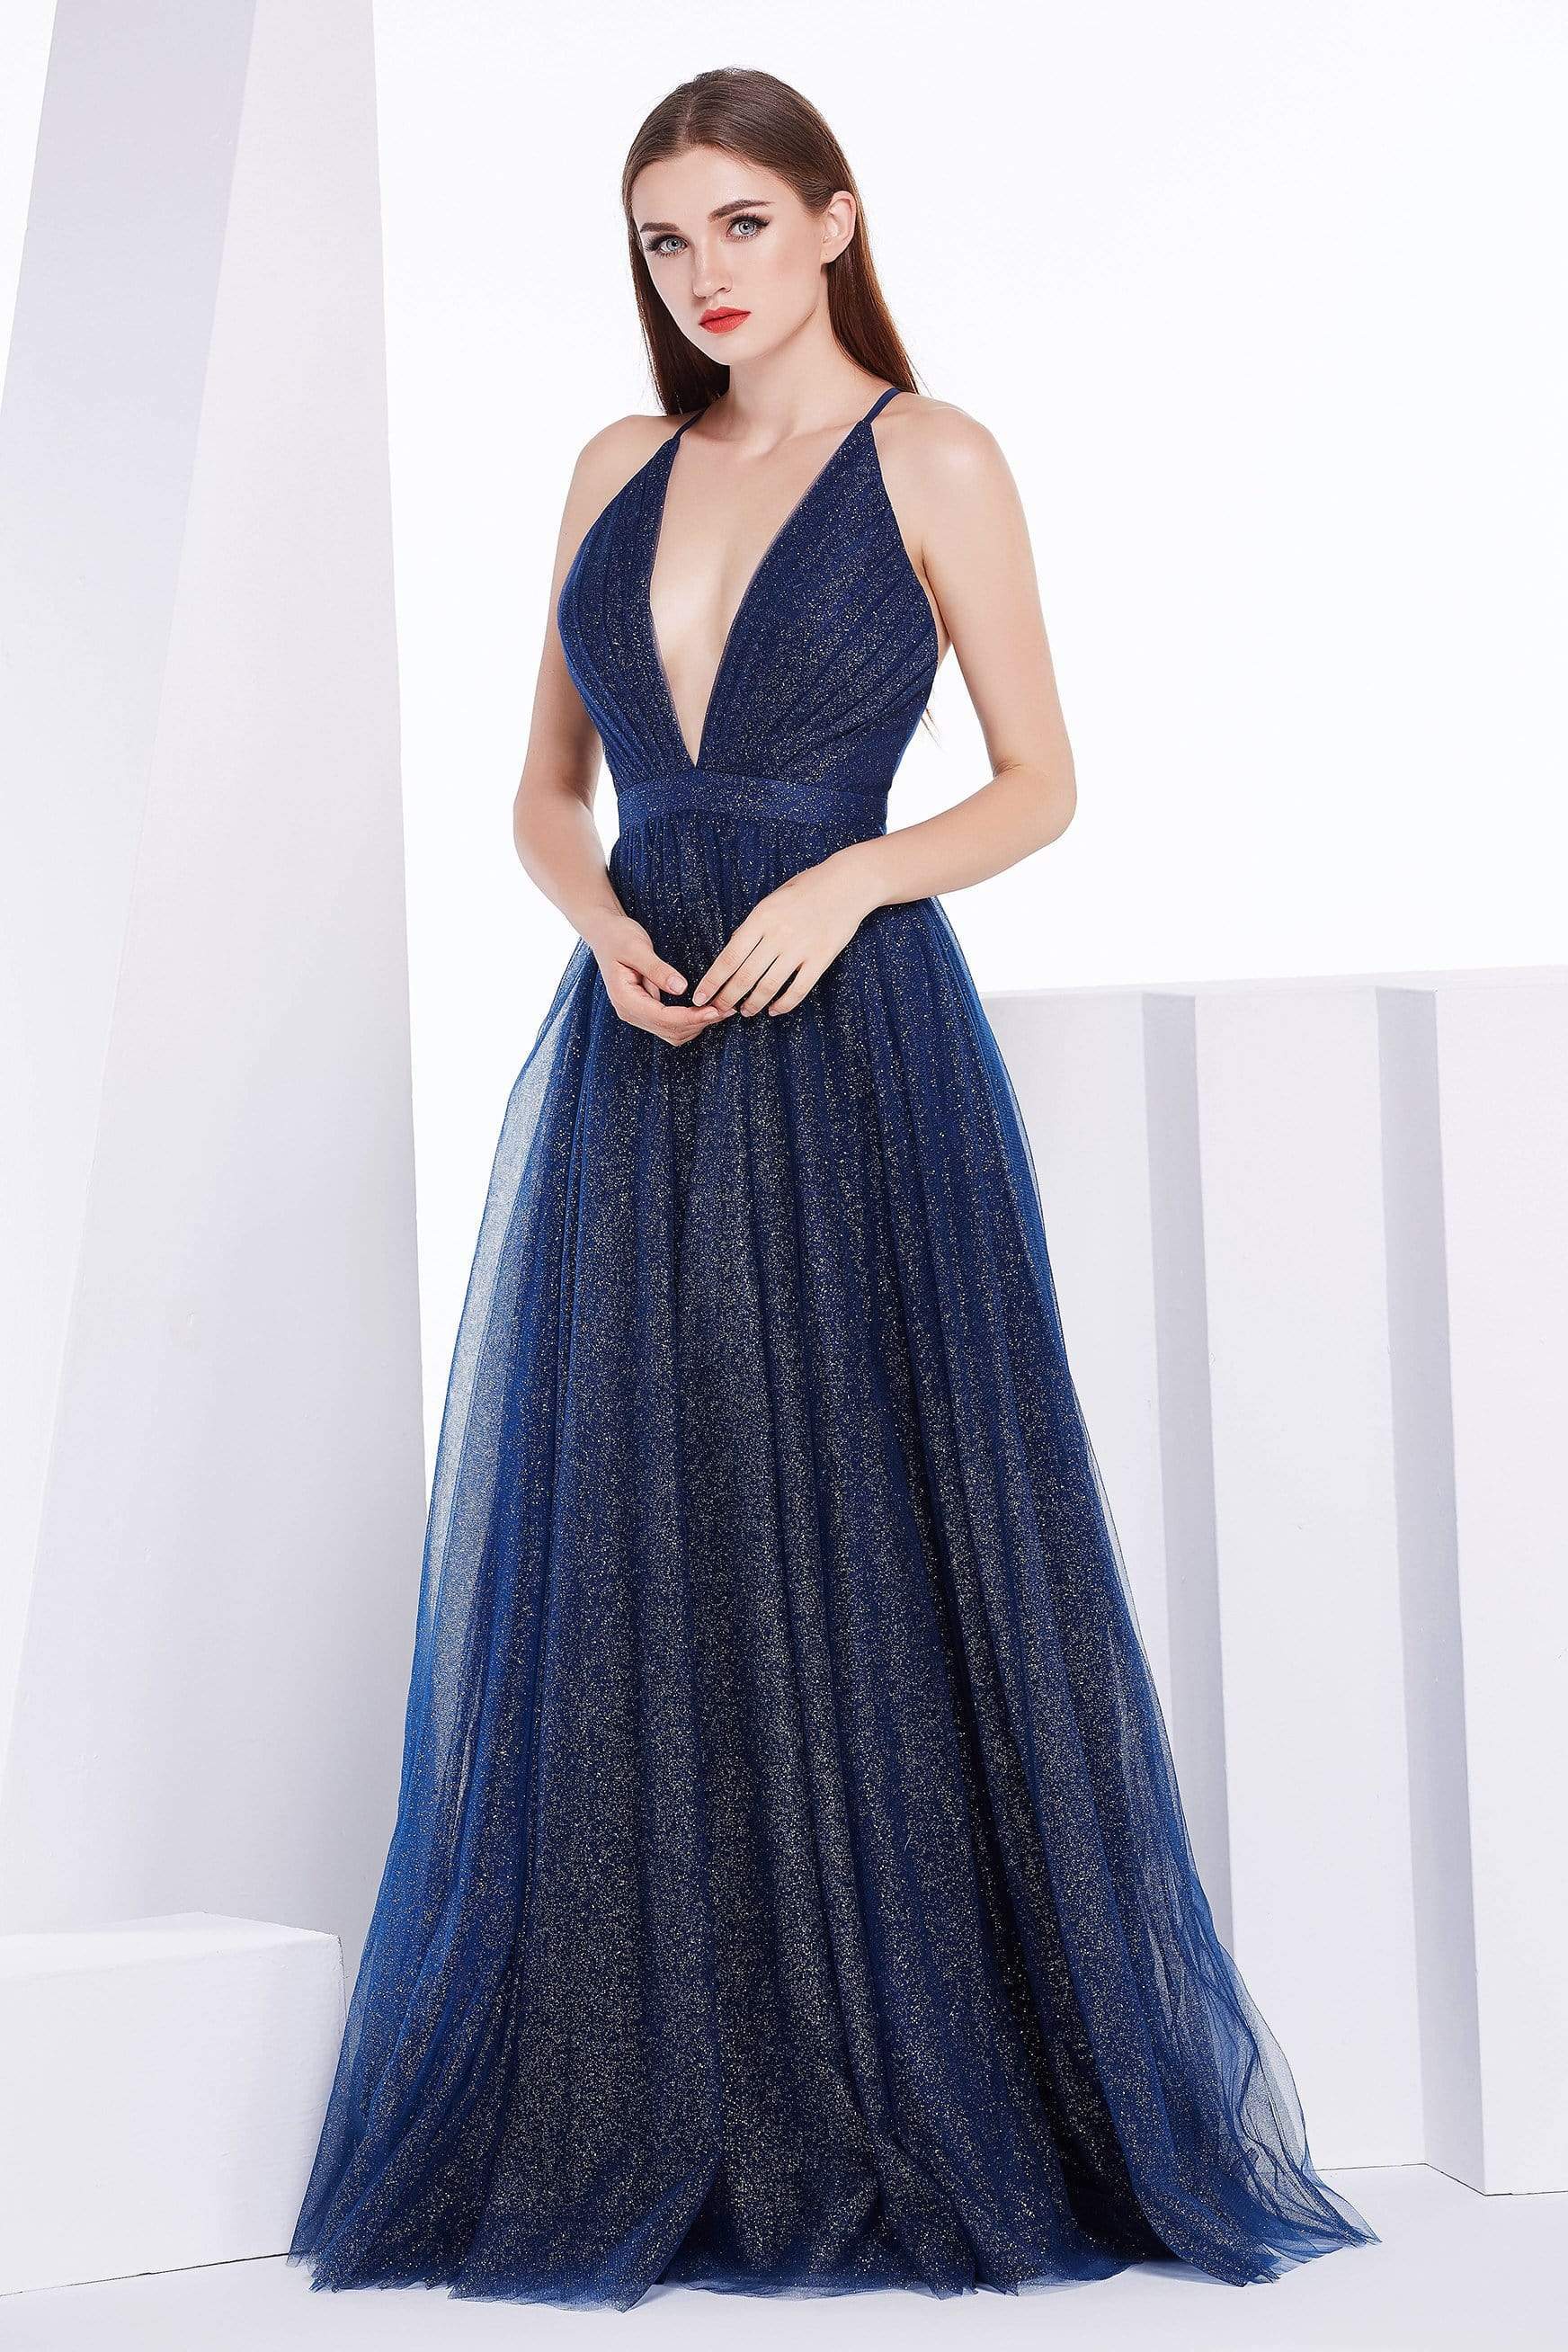 J'Adore Dresses - J14041 Deep V-neck Sparkle Tulle A-line Dress
